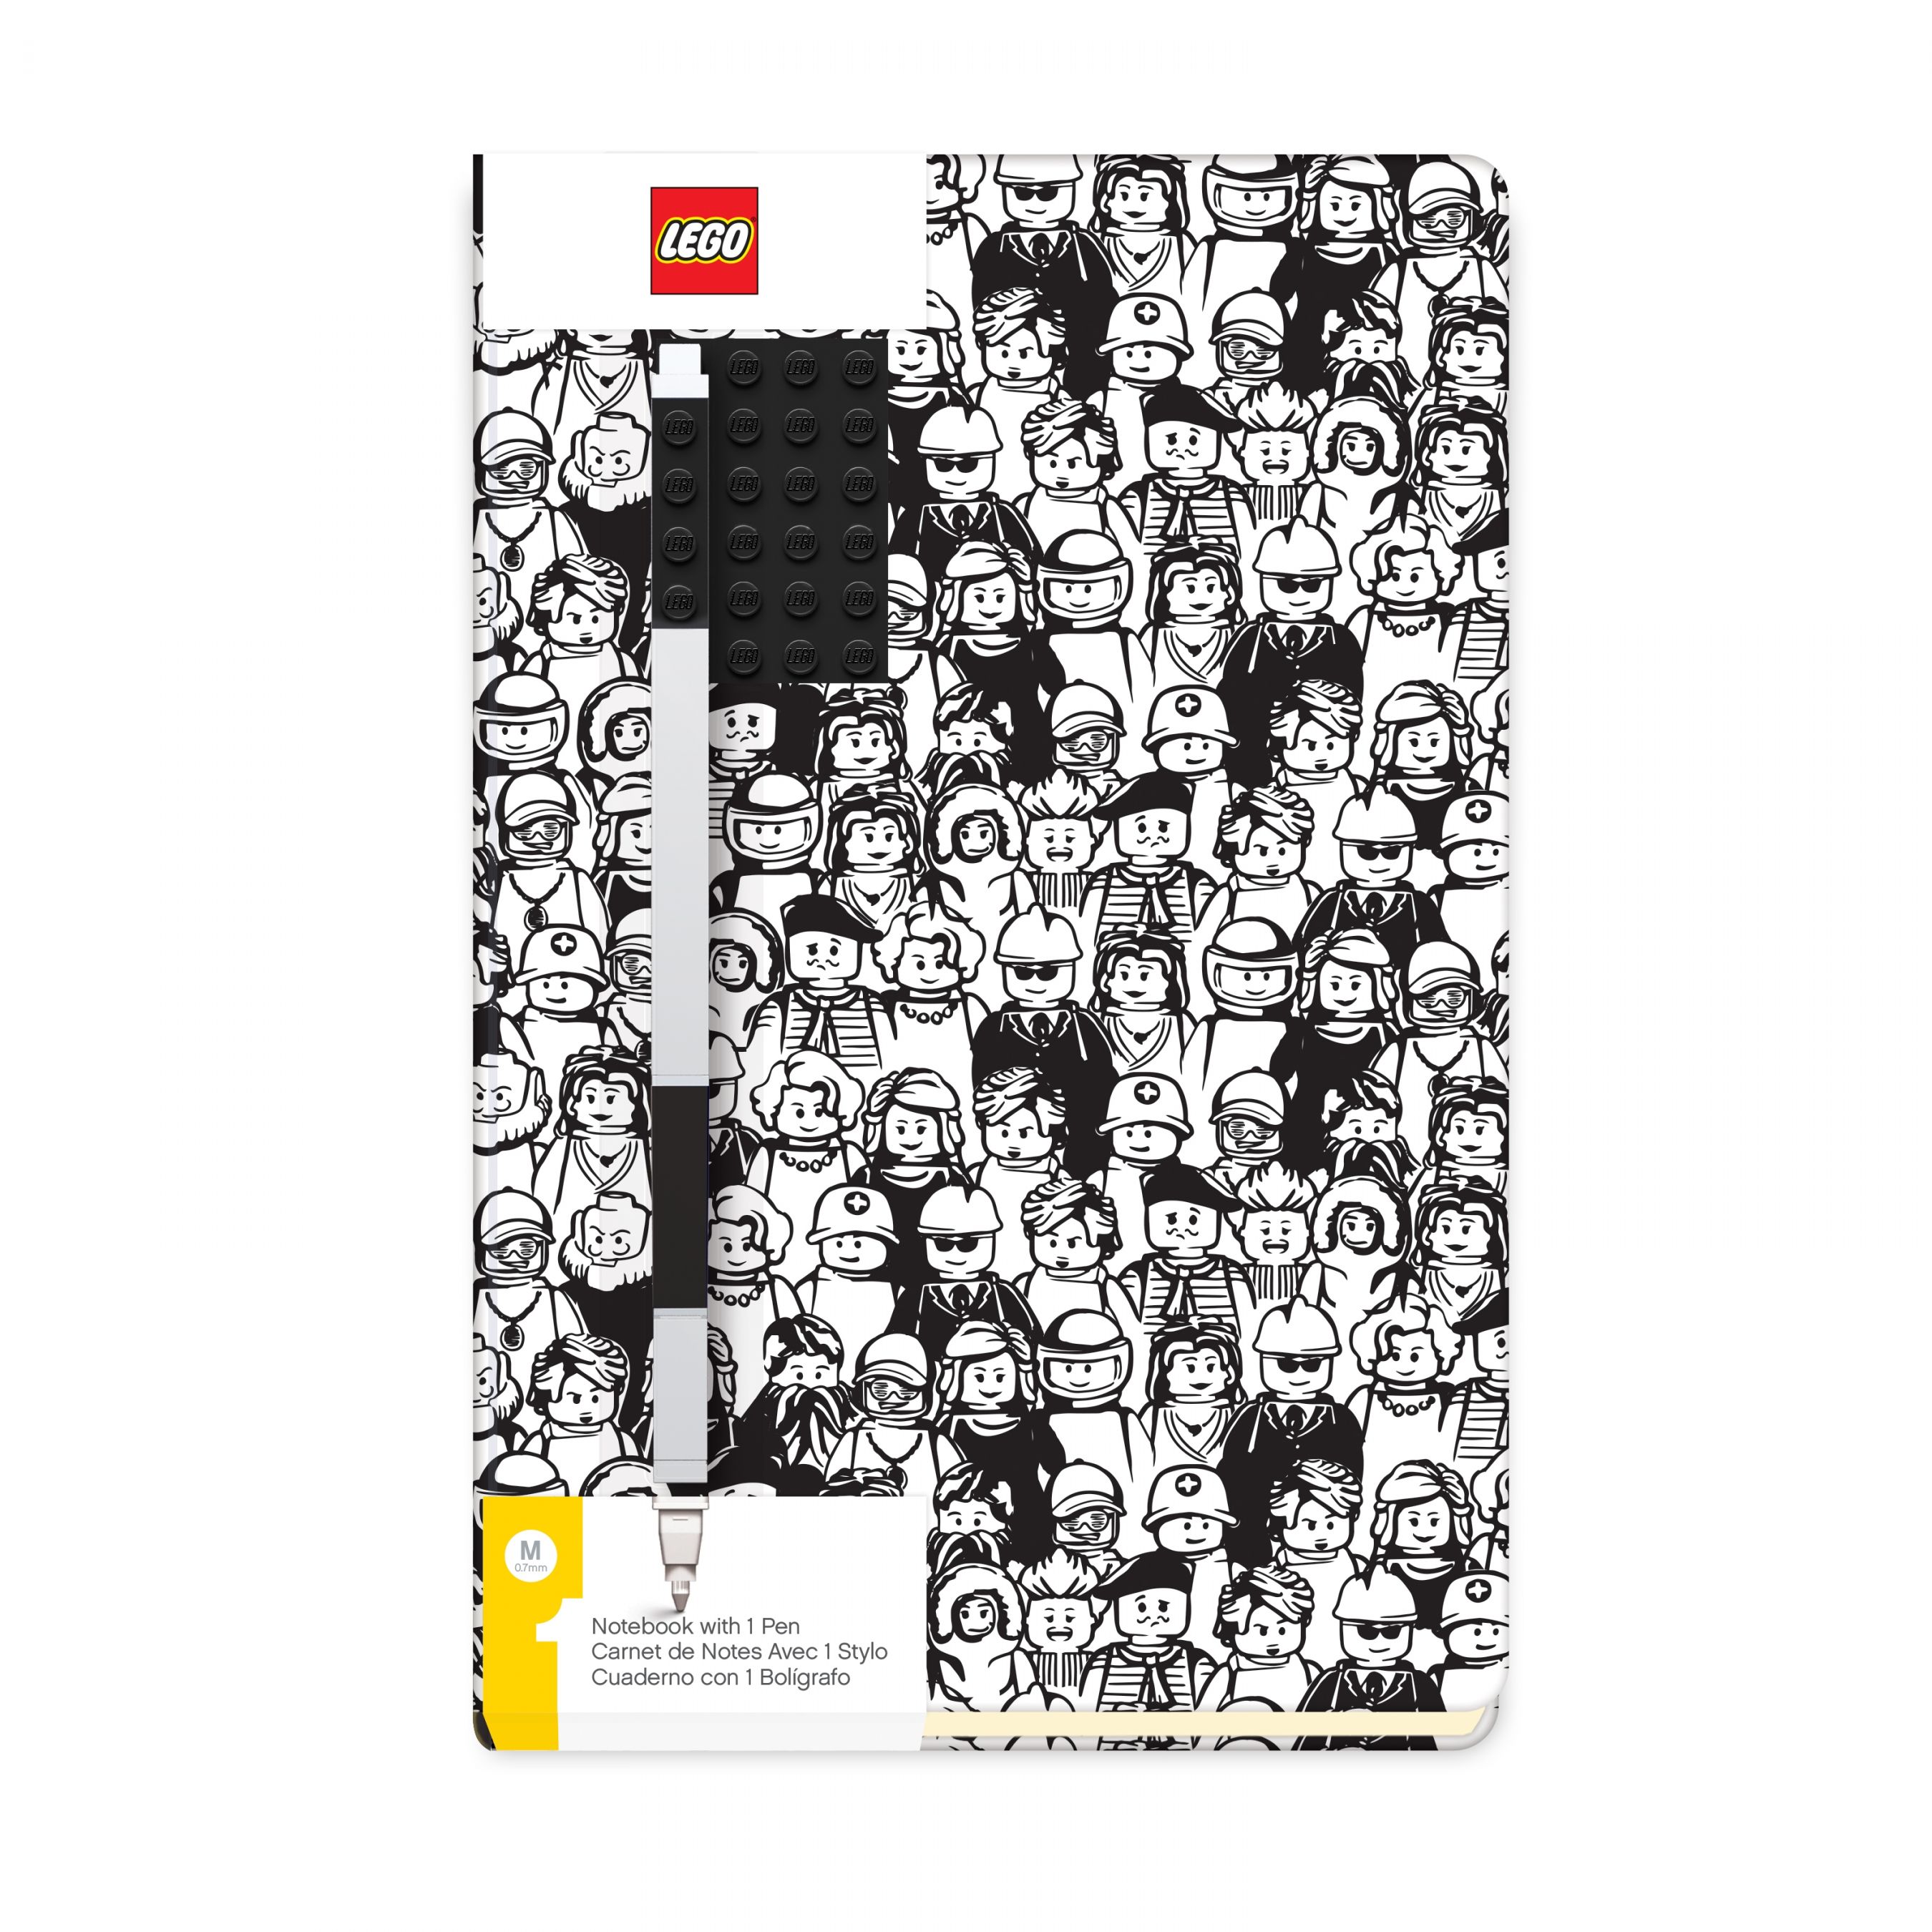 LEGO Gear 5006295 Mini Figure Notebook with gel pen LEGO_5006295_alt2.jpg